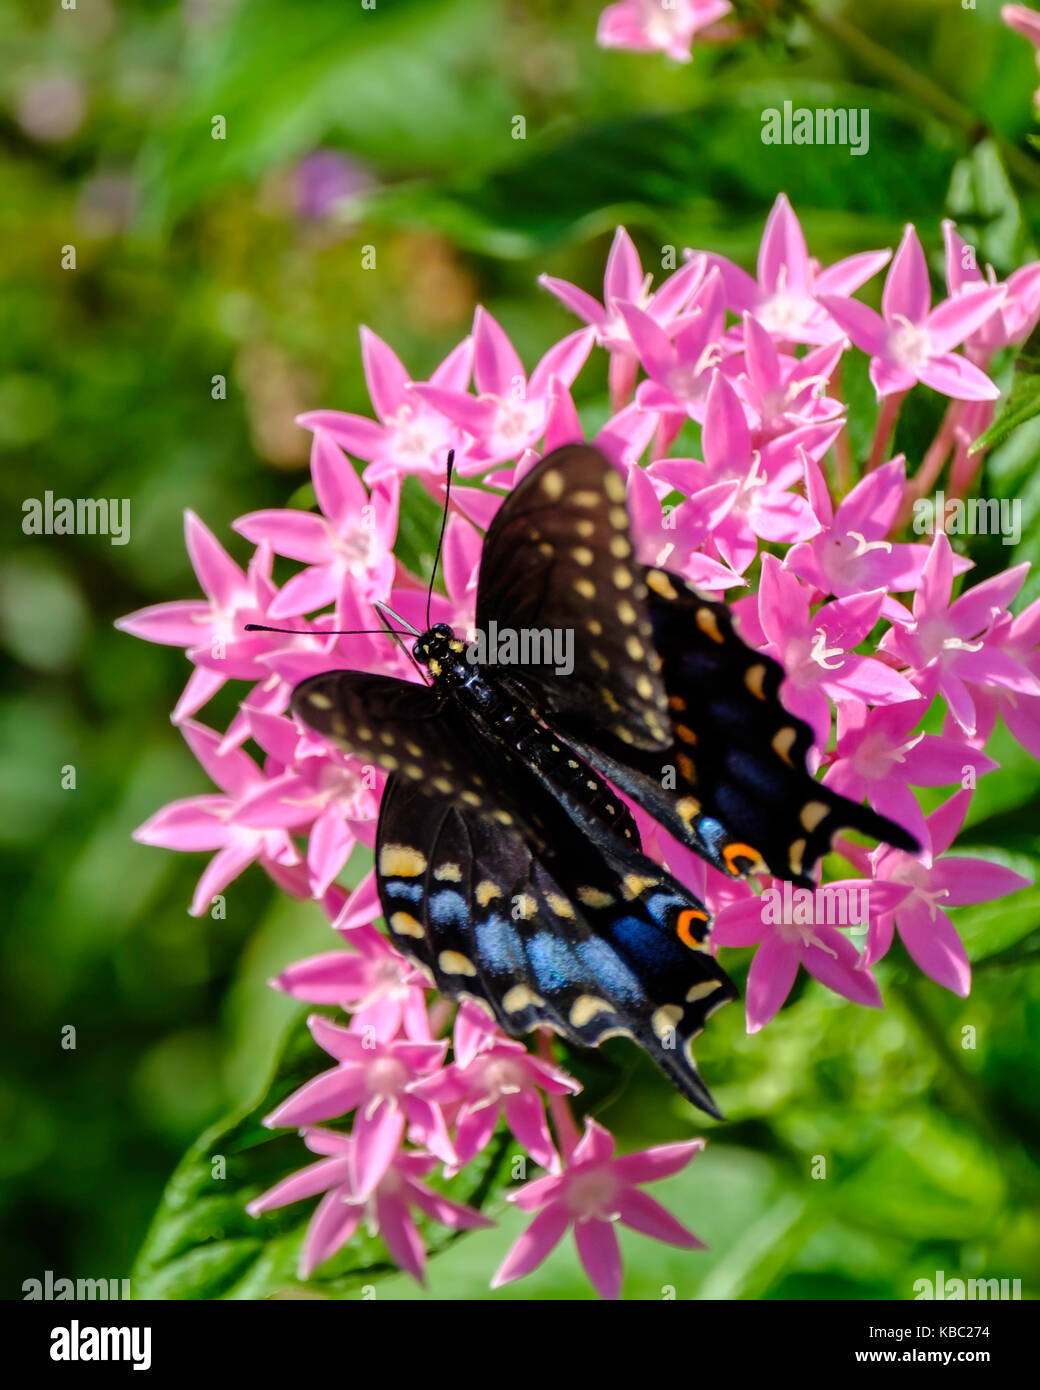 Pipevine Swallowtail or Battus philenor on Pentas lanceolata or Starflower. Showing double wings open. Oklahoma, USA. Stock Photo